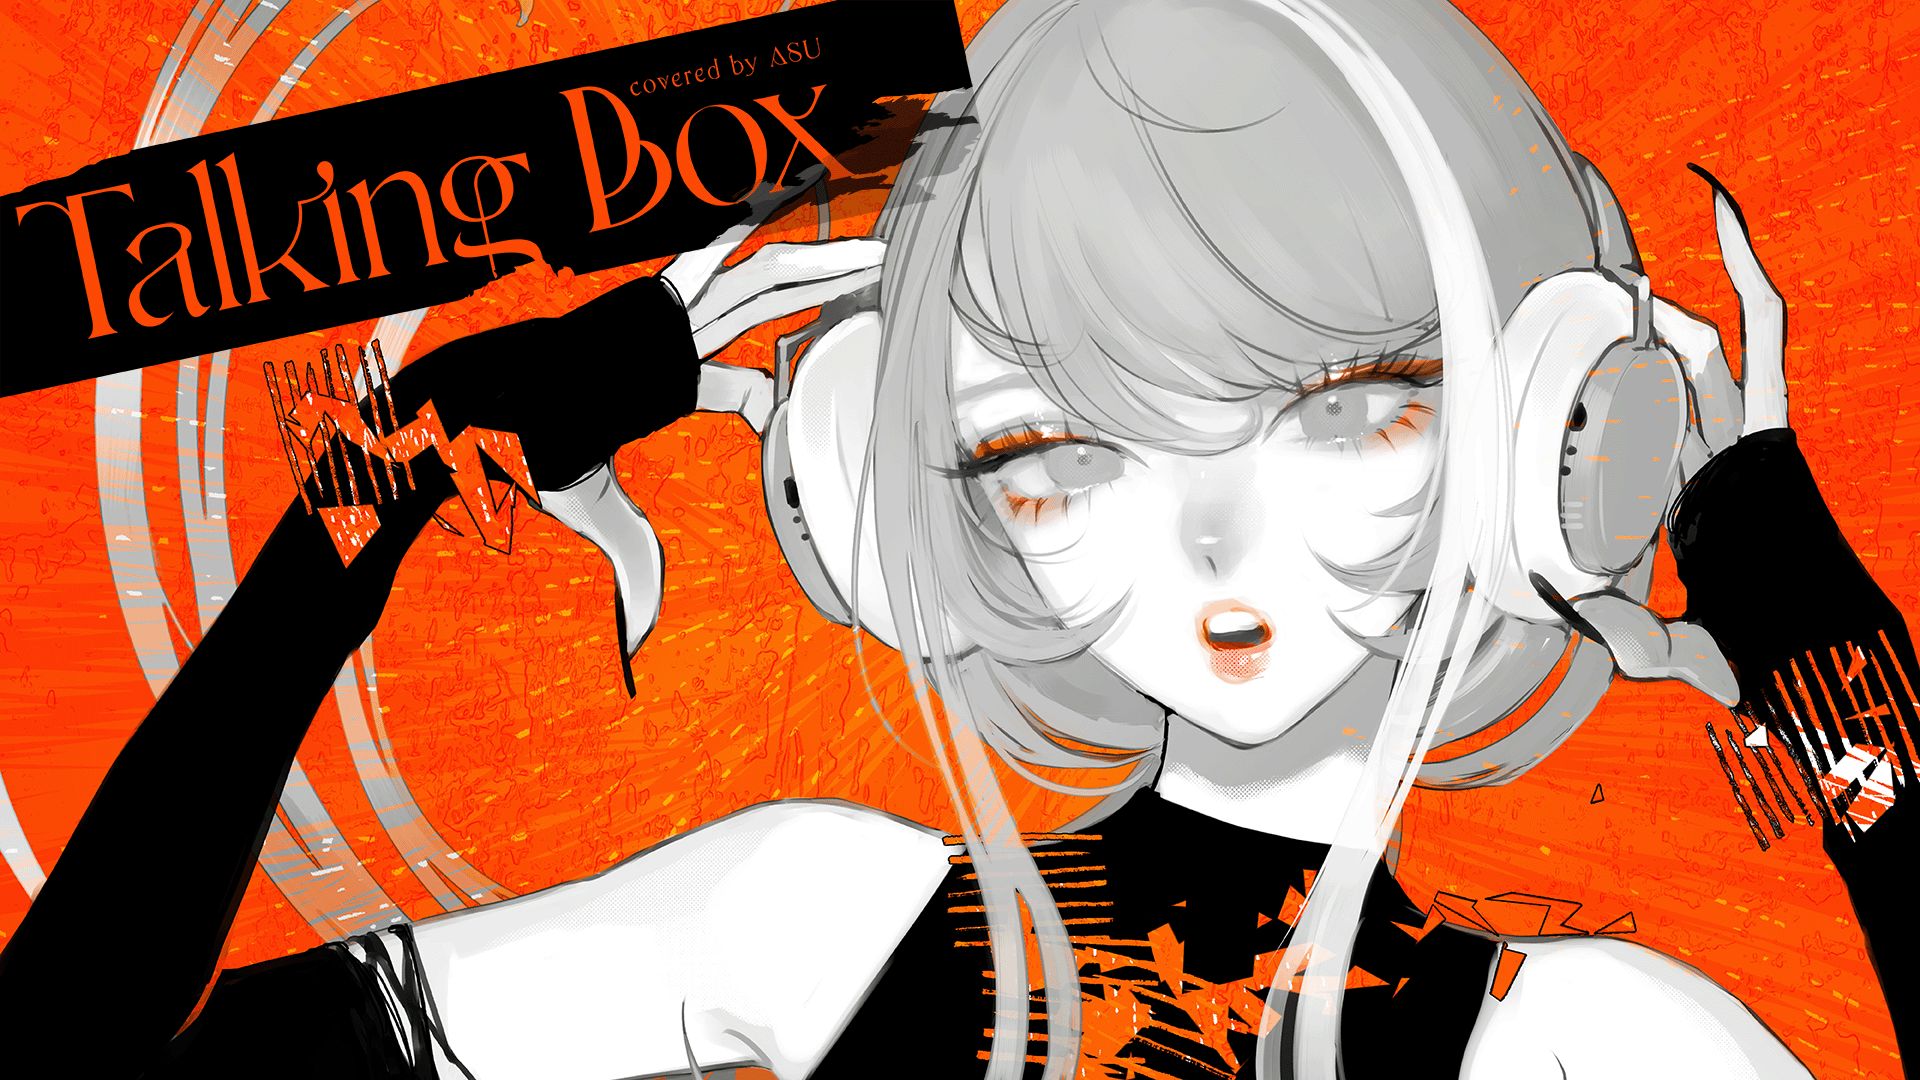 Talking Box - WurtS covered by 明透